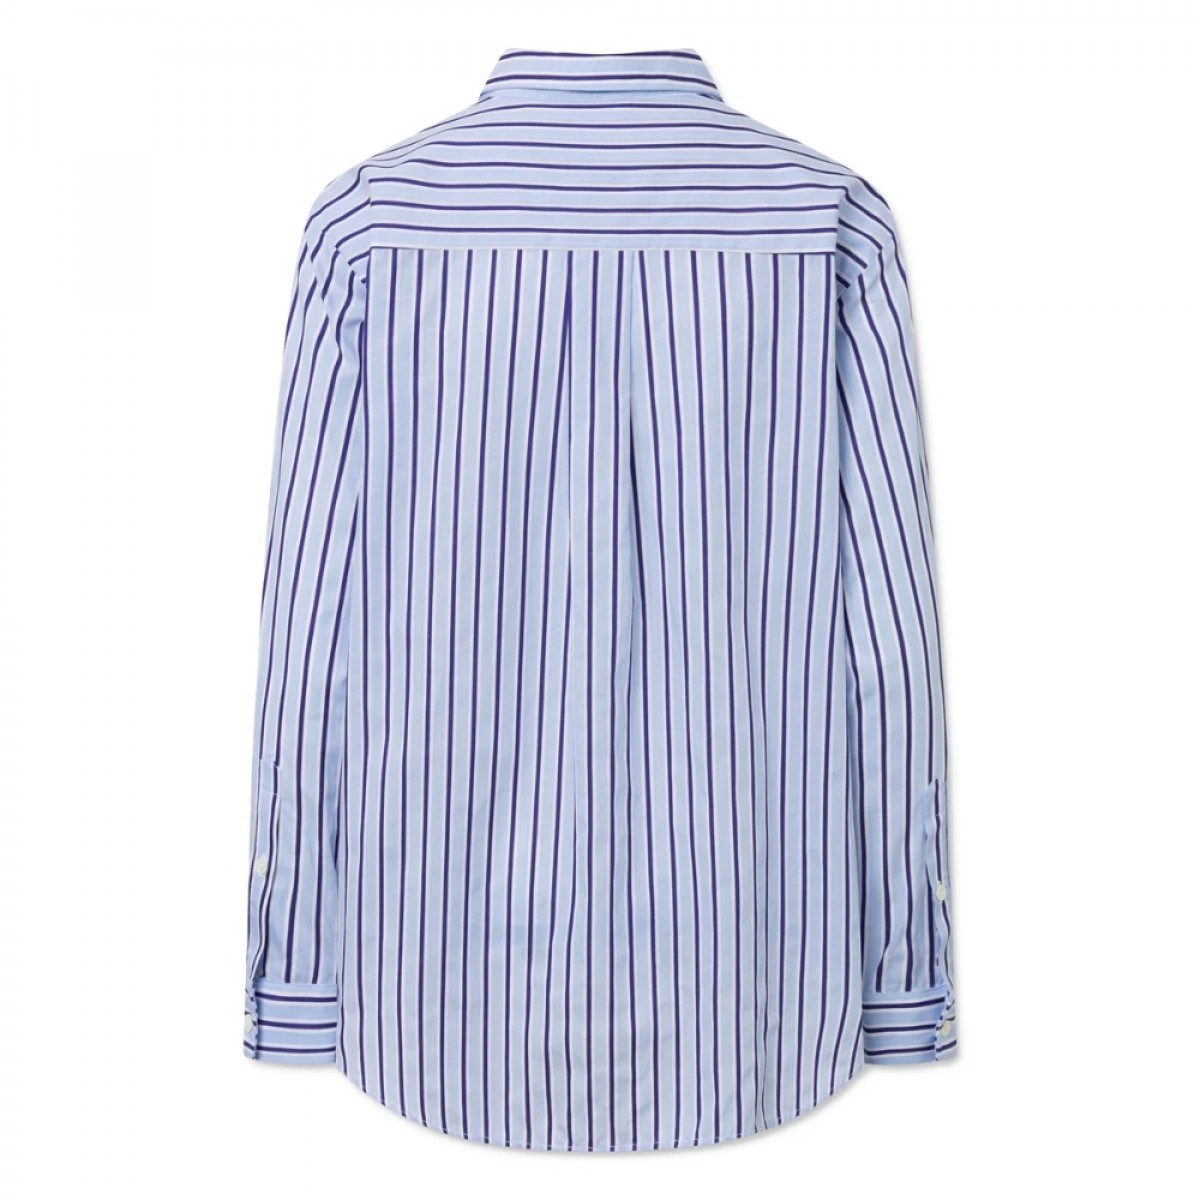 elotta shirt - blue stripe - ryg